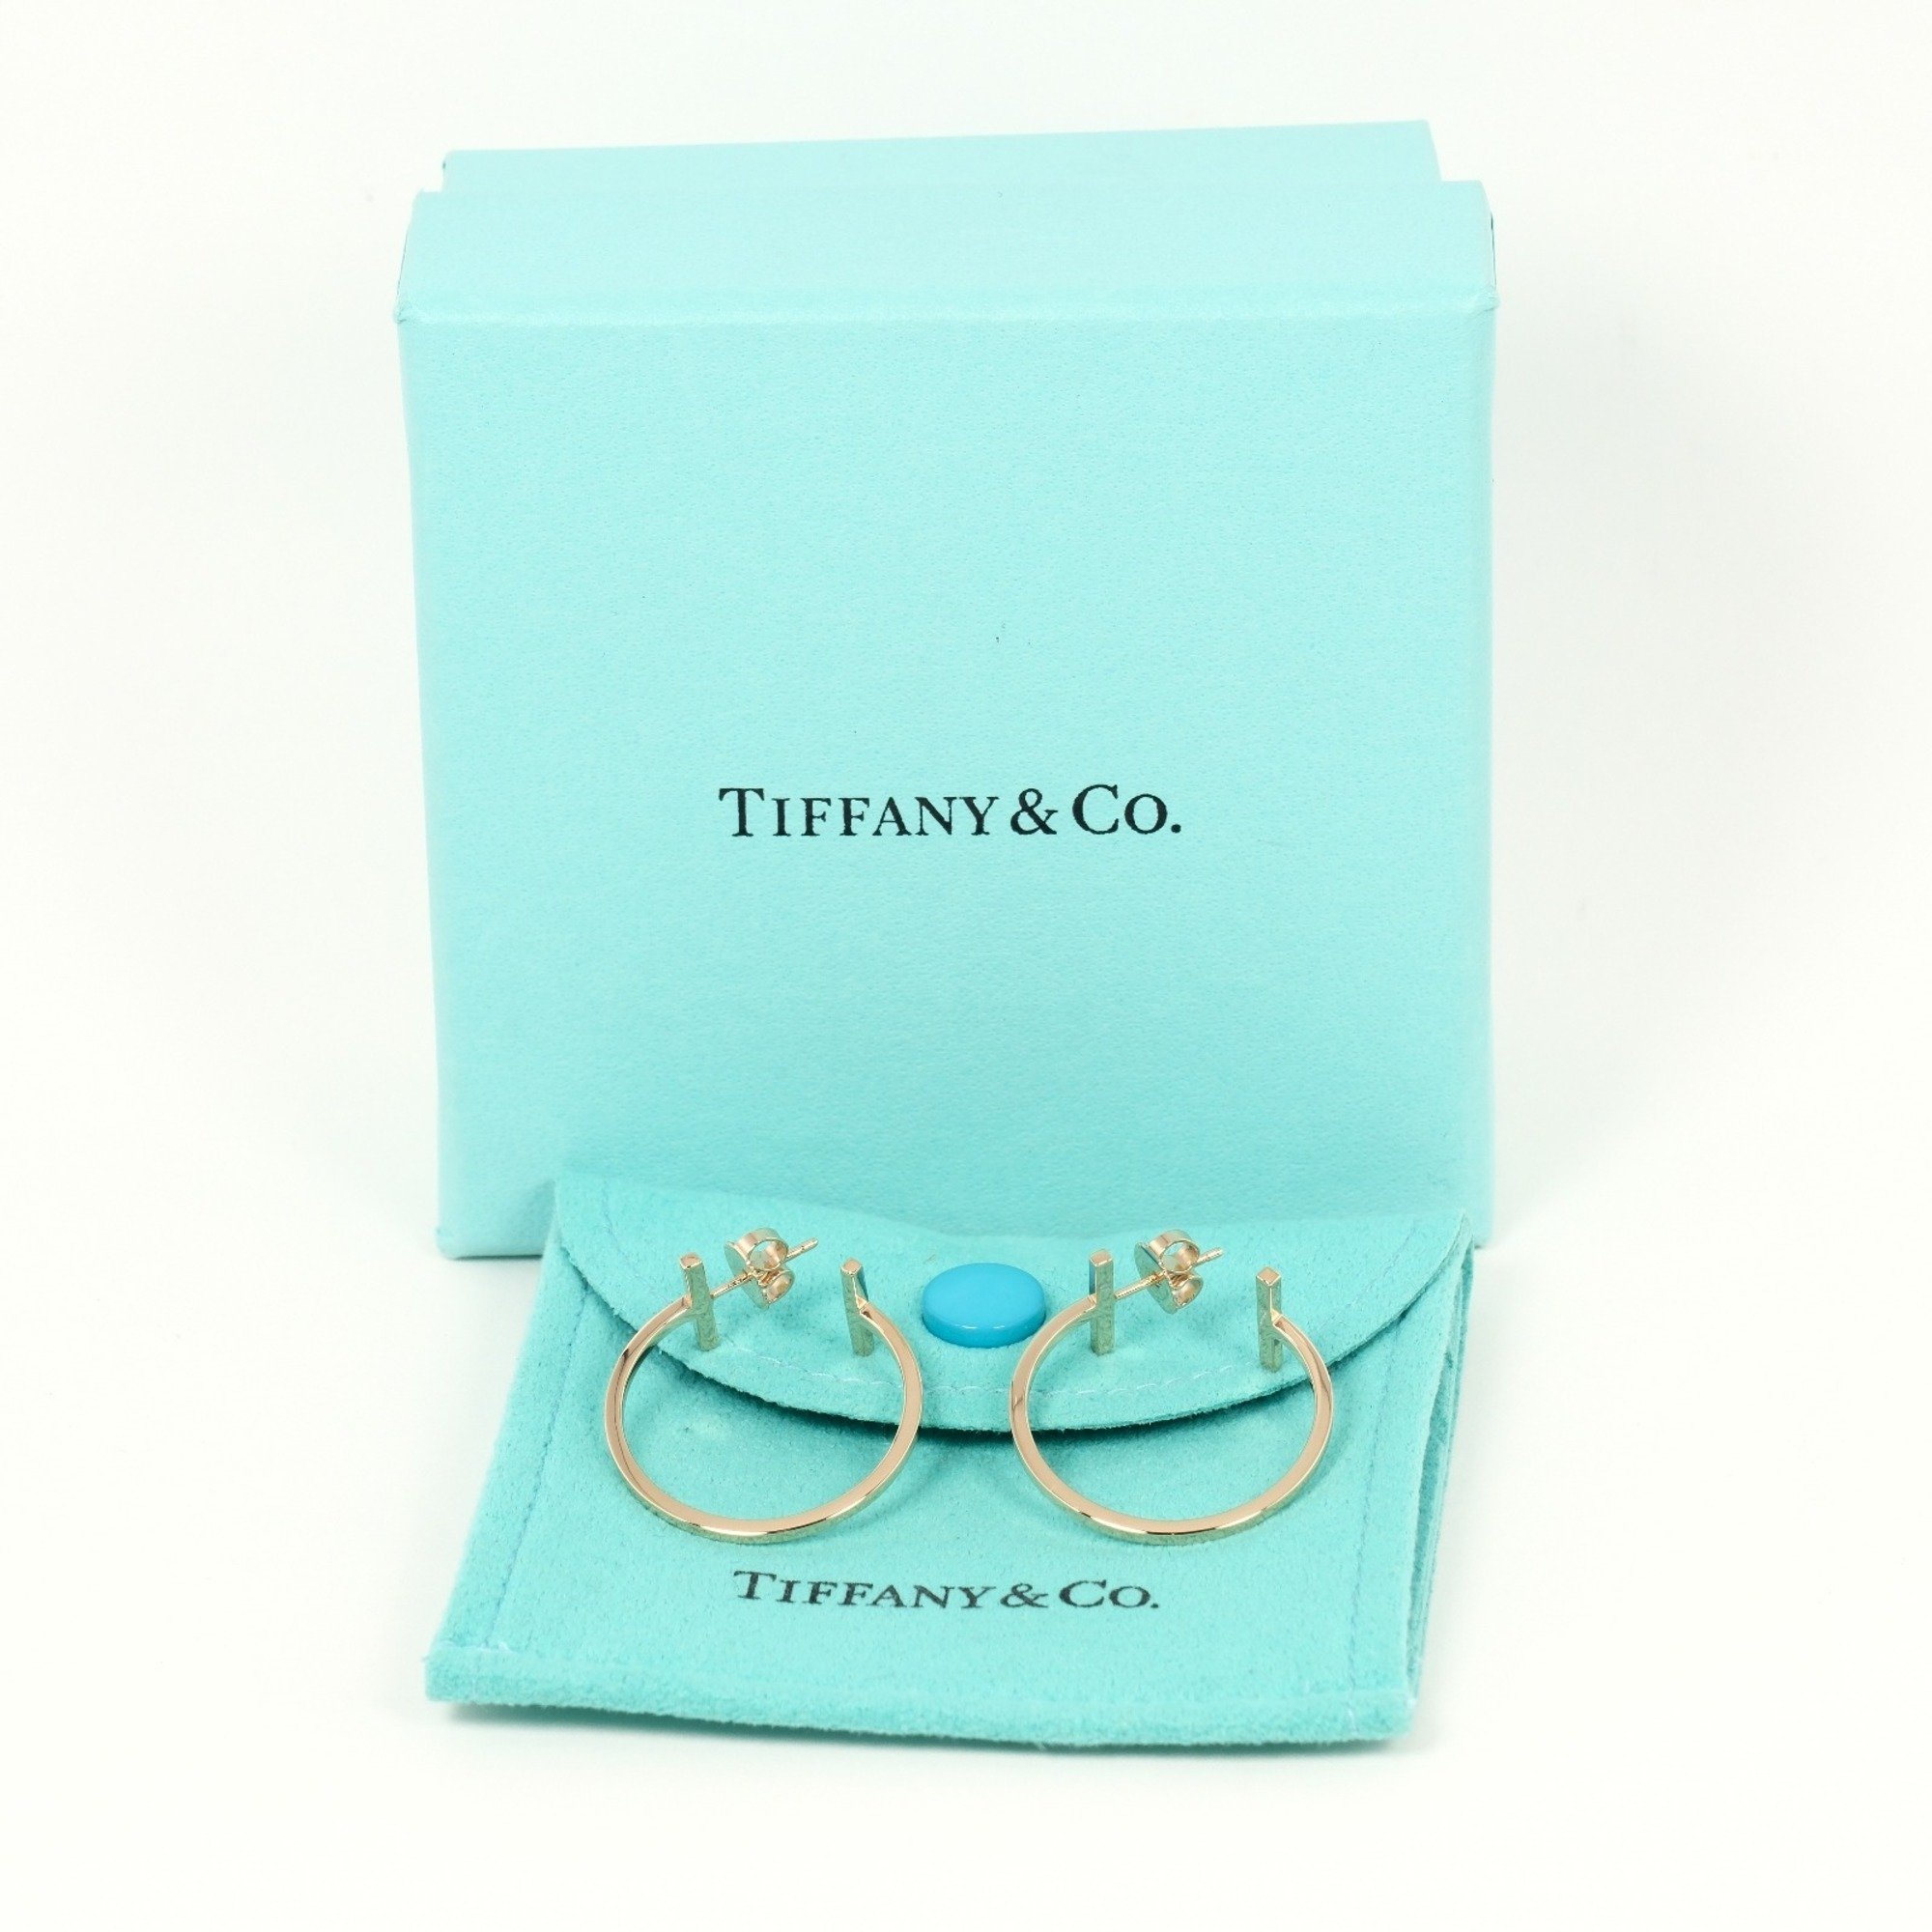 Tiffany & Co. T Hoop Medium Earrings, K18 PG Pink Gold, Approx. 4.72g I112223161